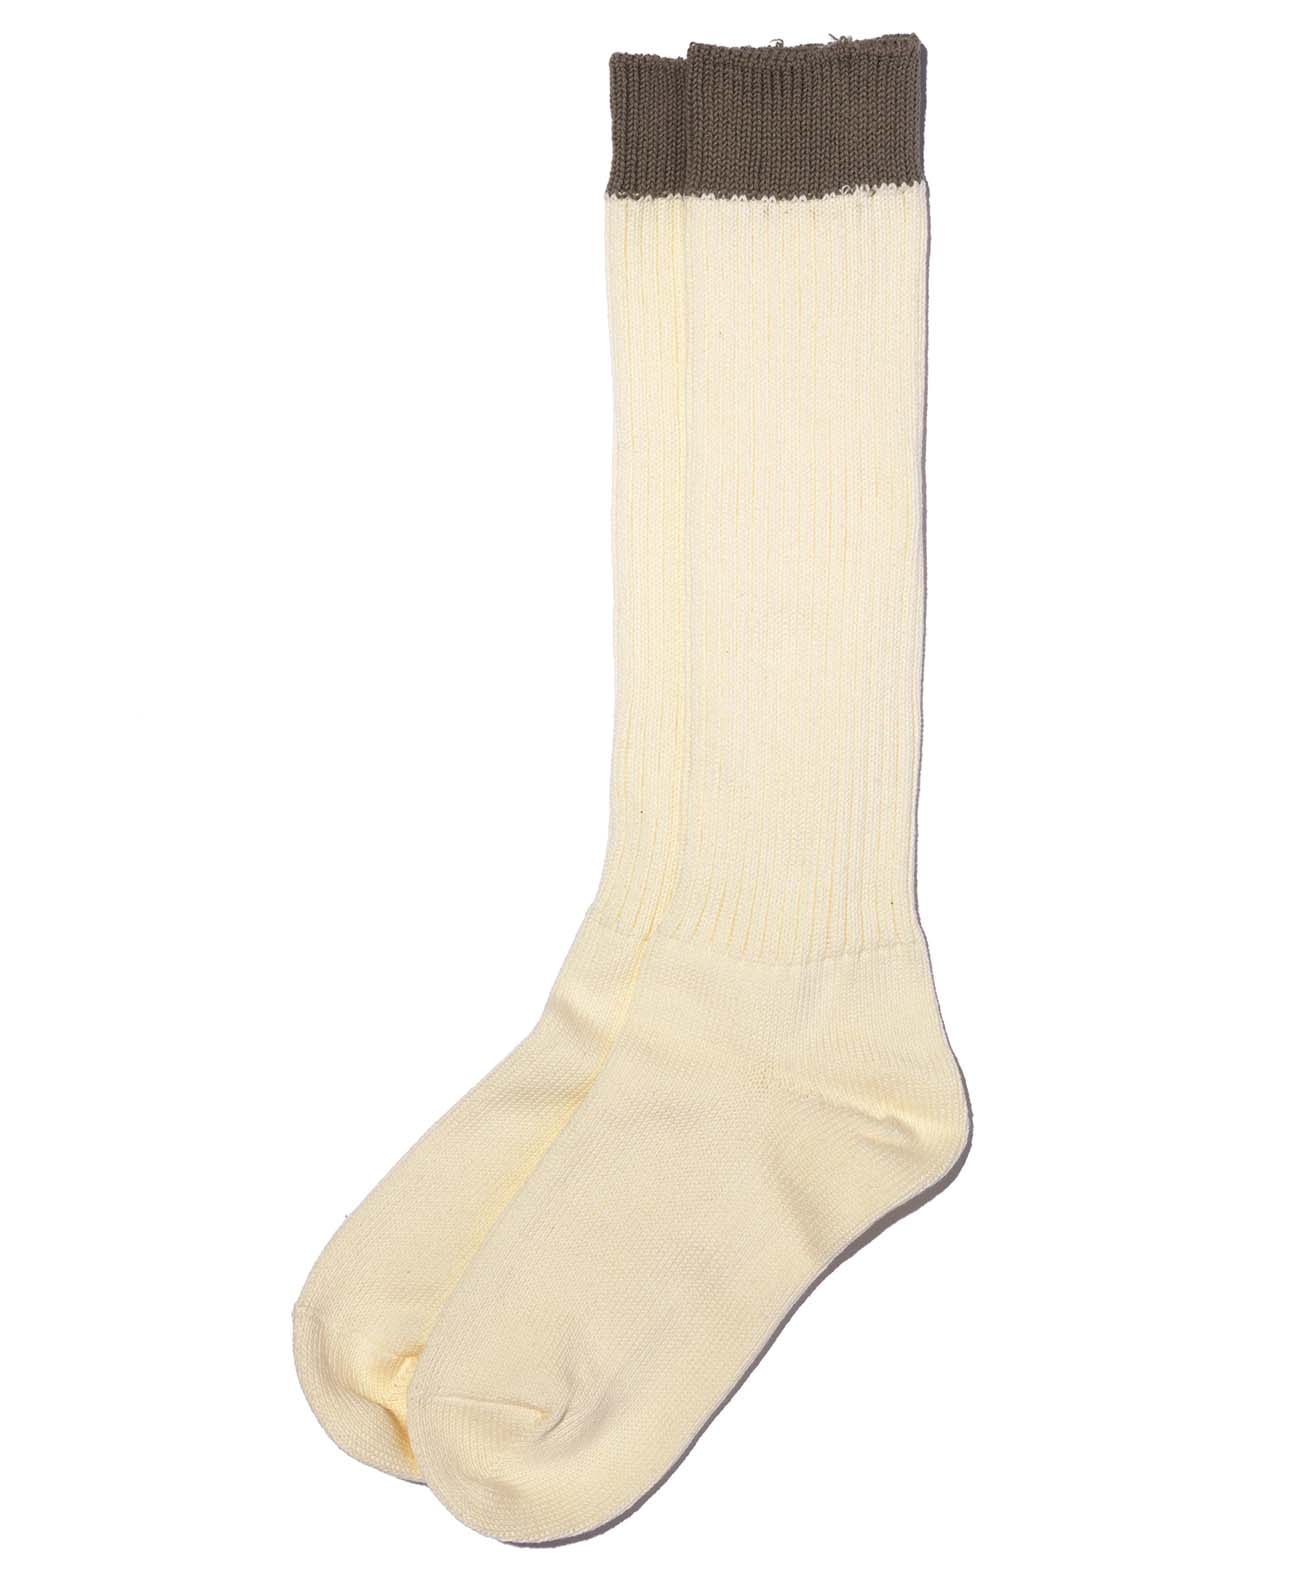 Boots Socks / Ivory / Grey (Women's)